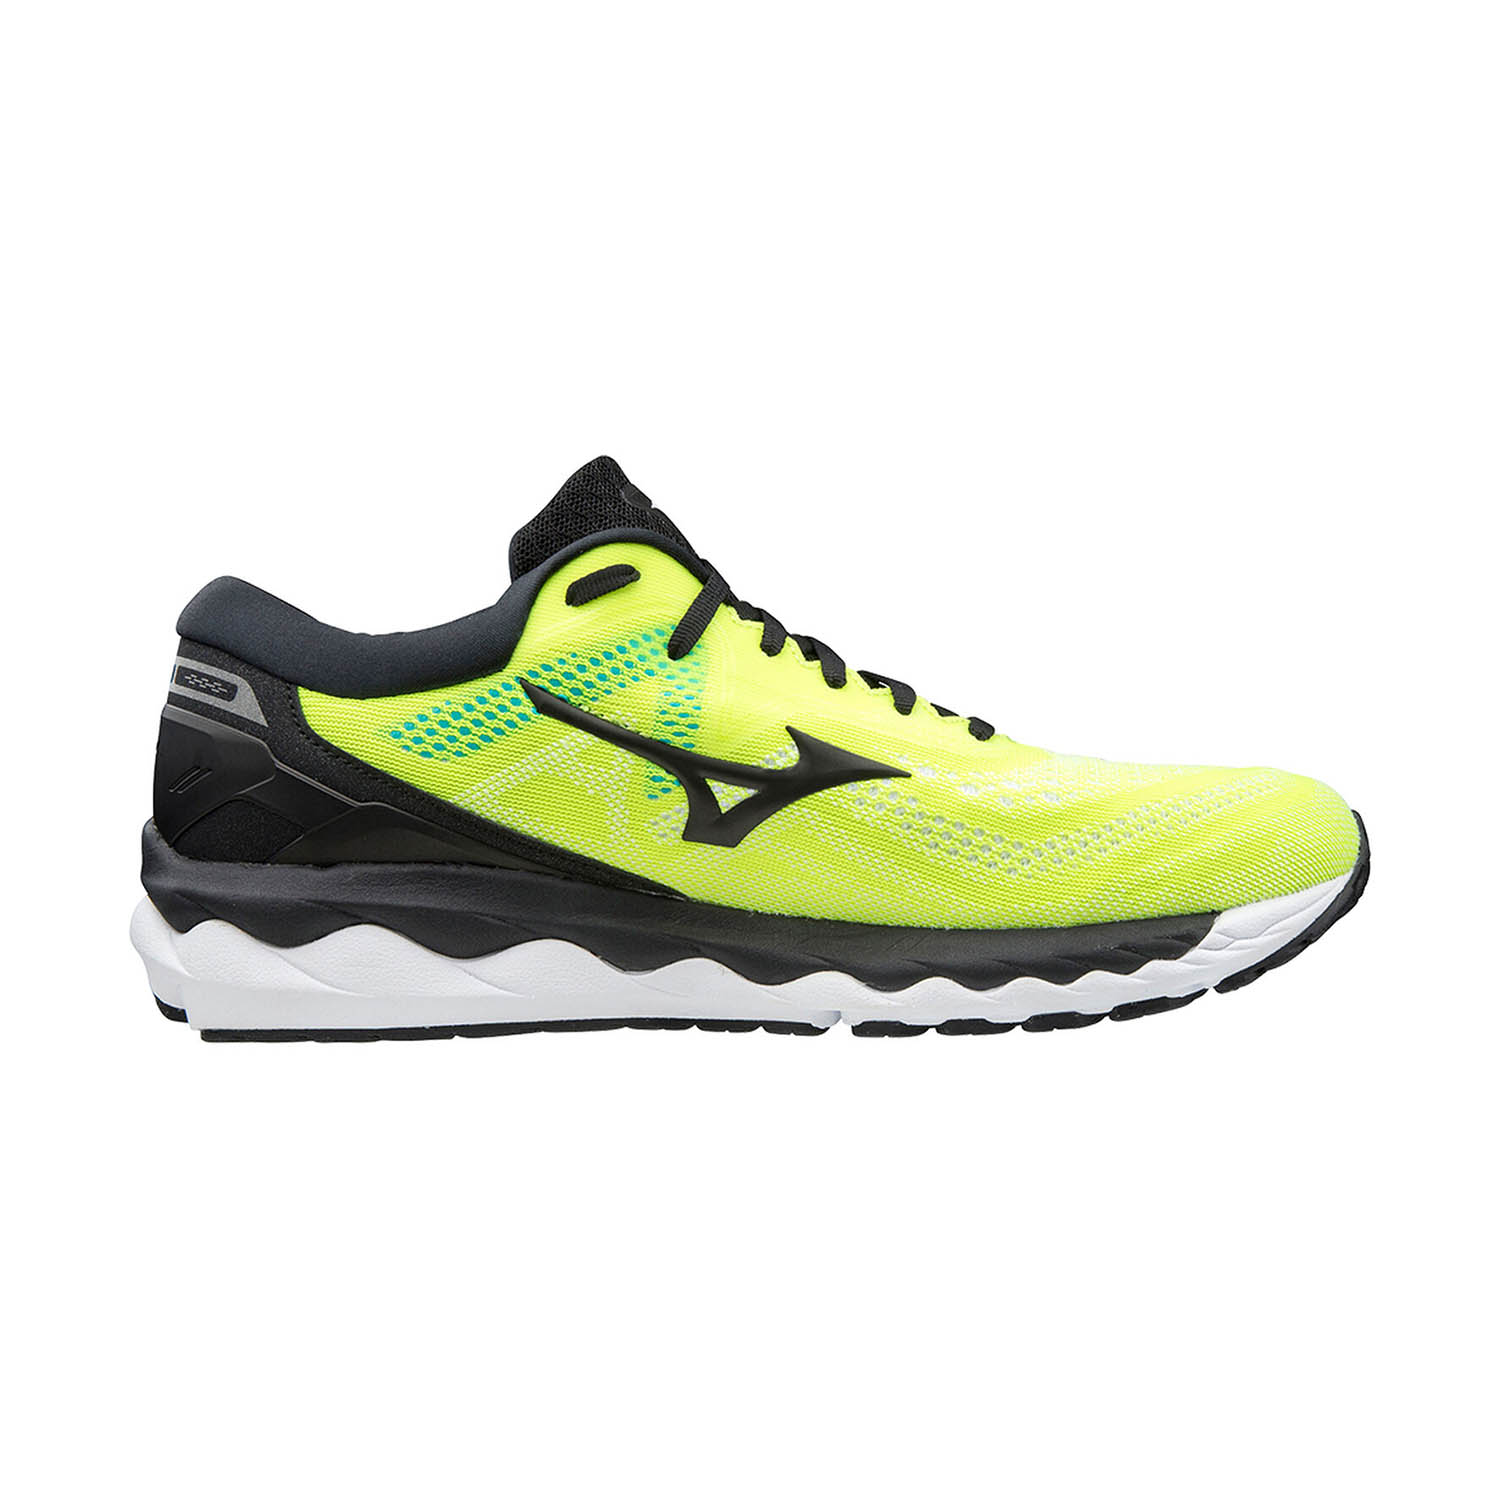 Mizuno Wave Sky 4 Men's Running Shoes - Safety Yellow/Black